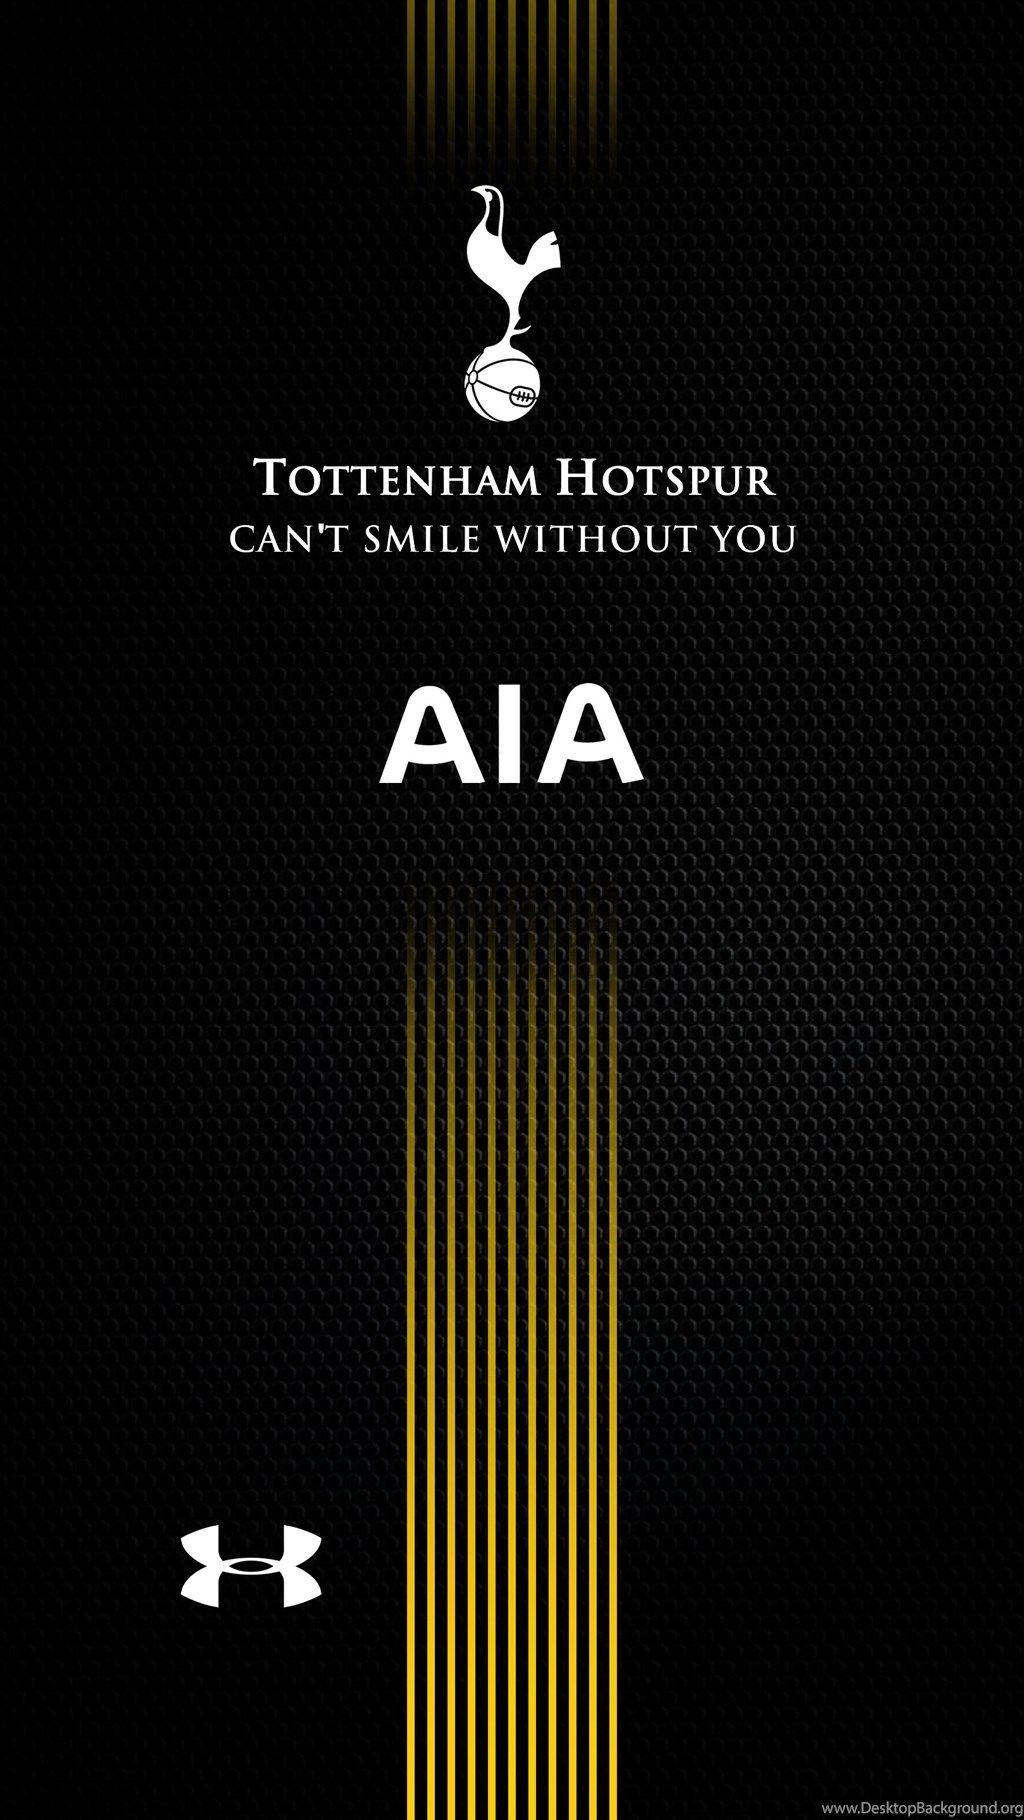 Download Tottenham Hotspur Smartphone Wallpaper ByGoloteHD 02